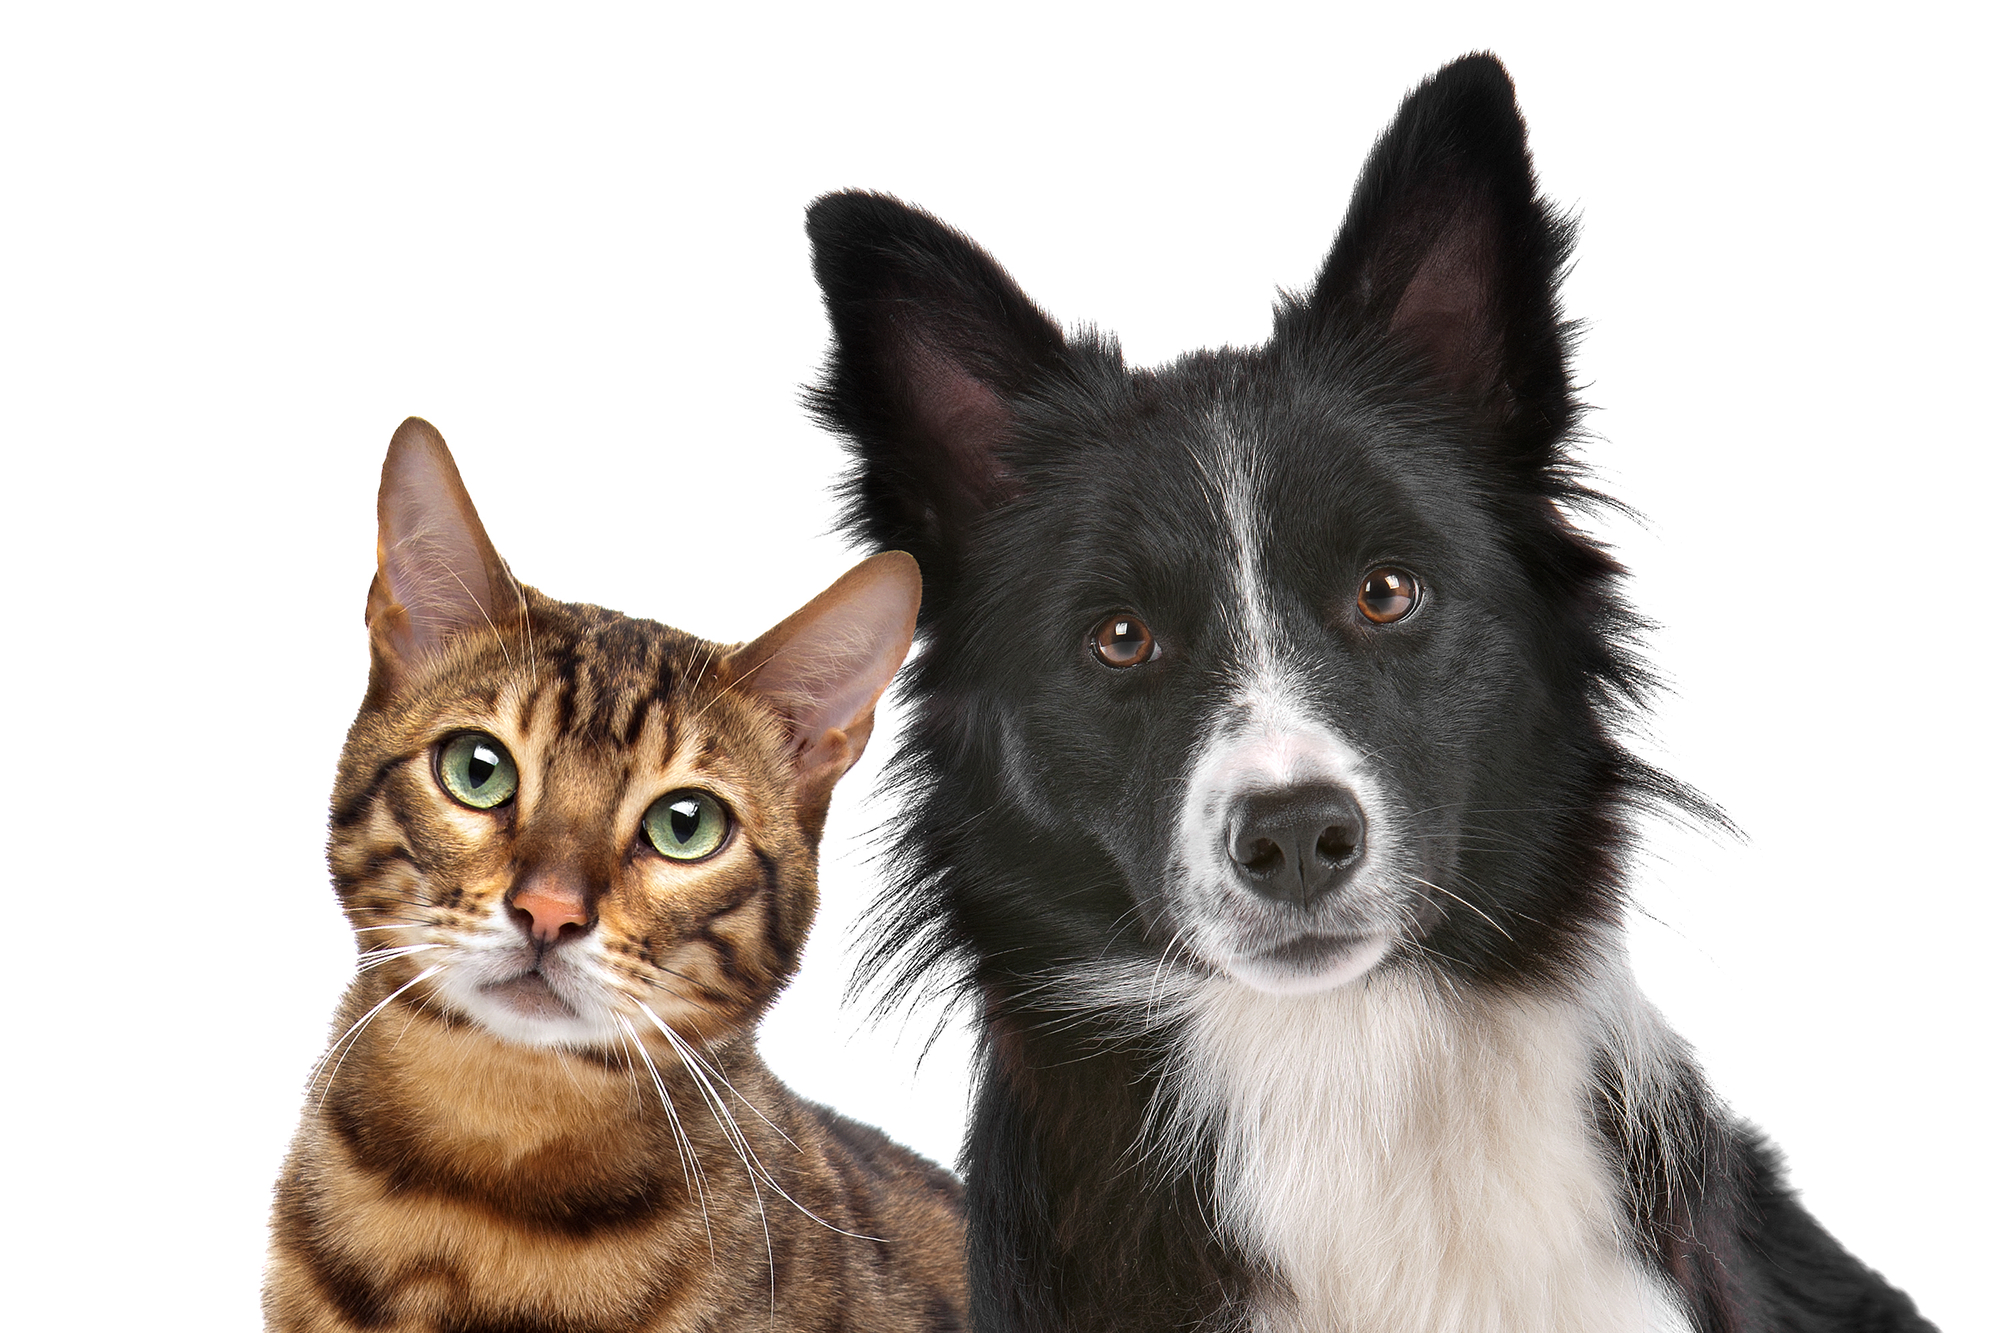 Dog and Cat, Hampton property management